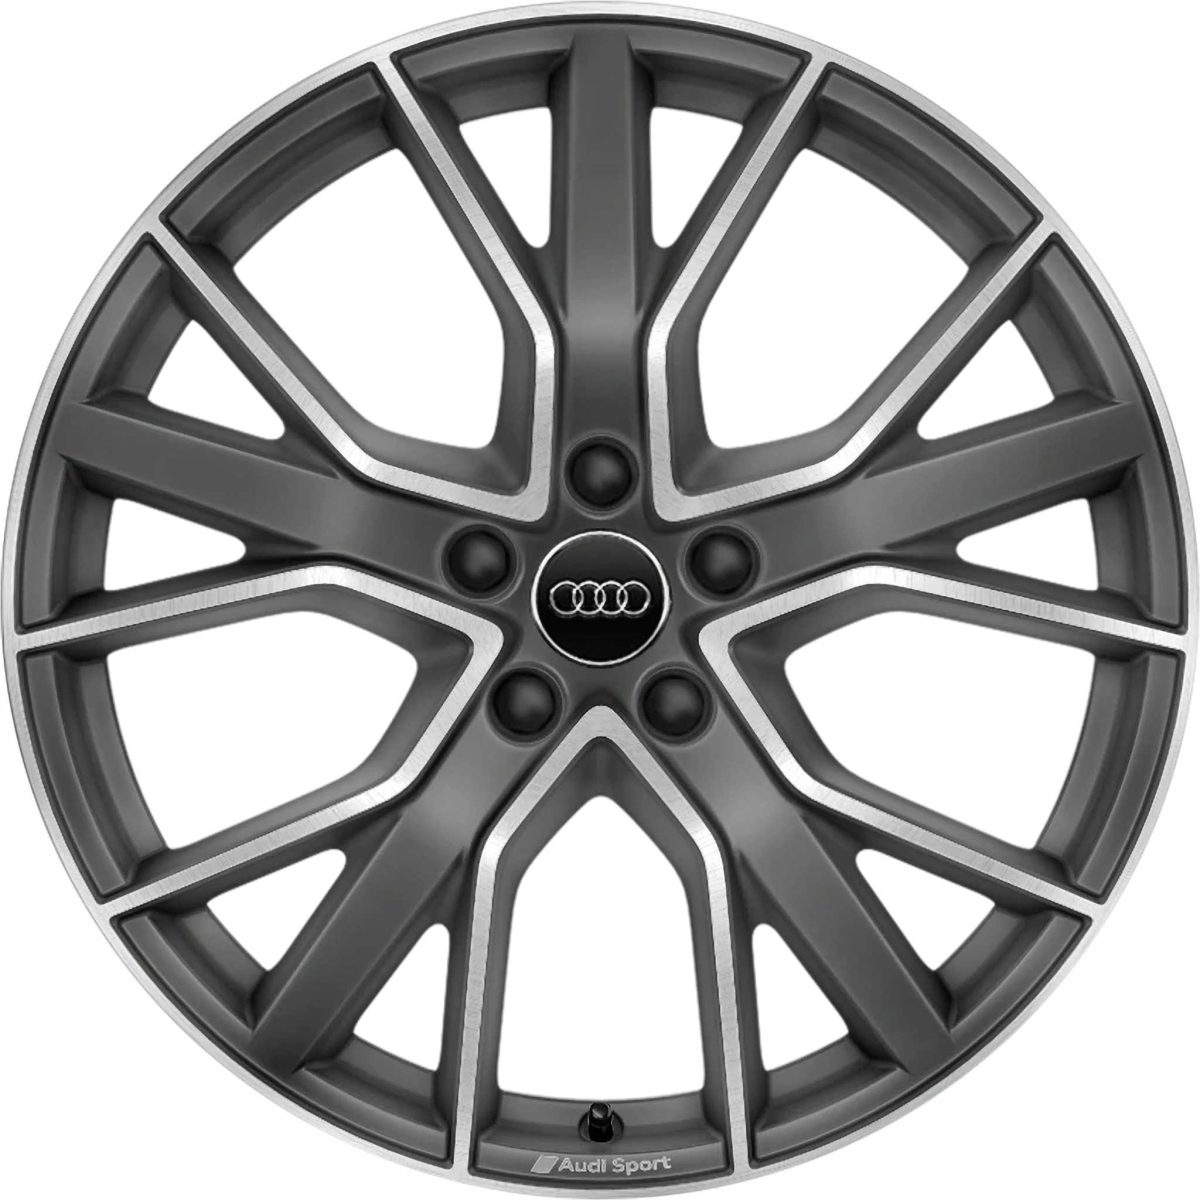 Genuine Audi A5 8W Y Spoke 20" Inch Alloy Wheels with Grey and Diamond Turned Finish 8W0 601 025 EG